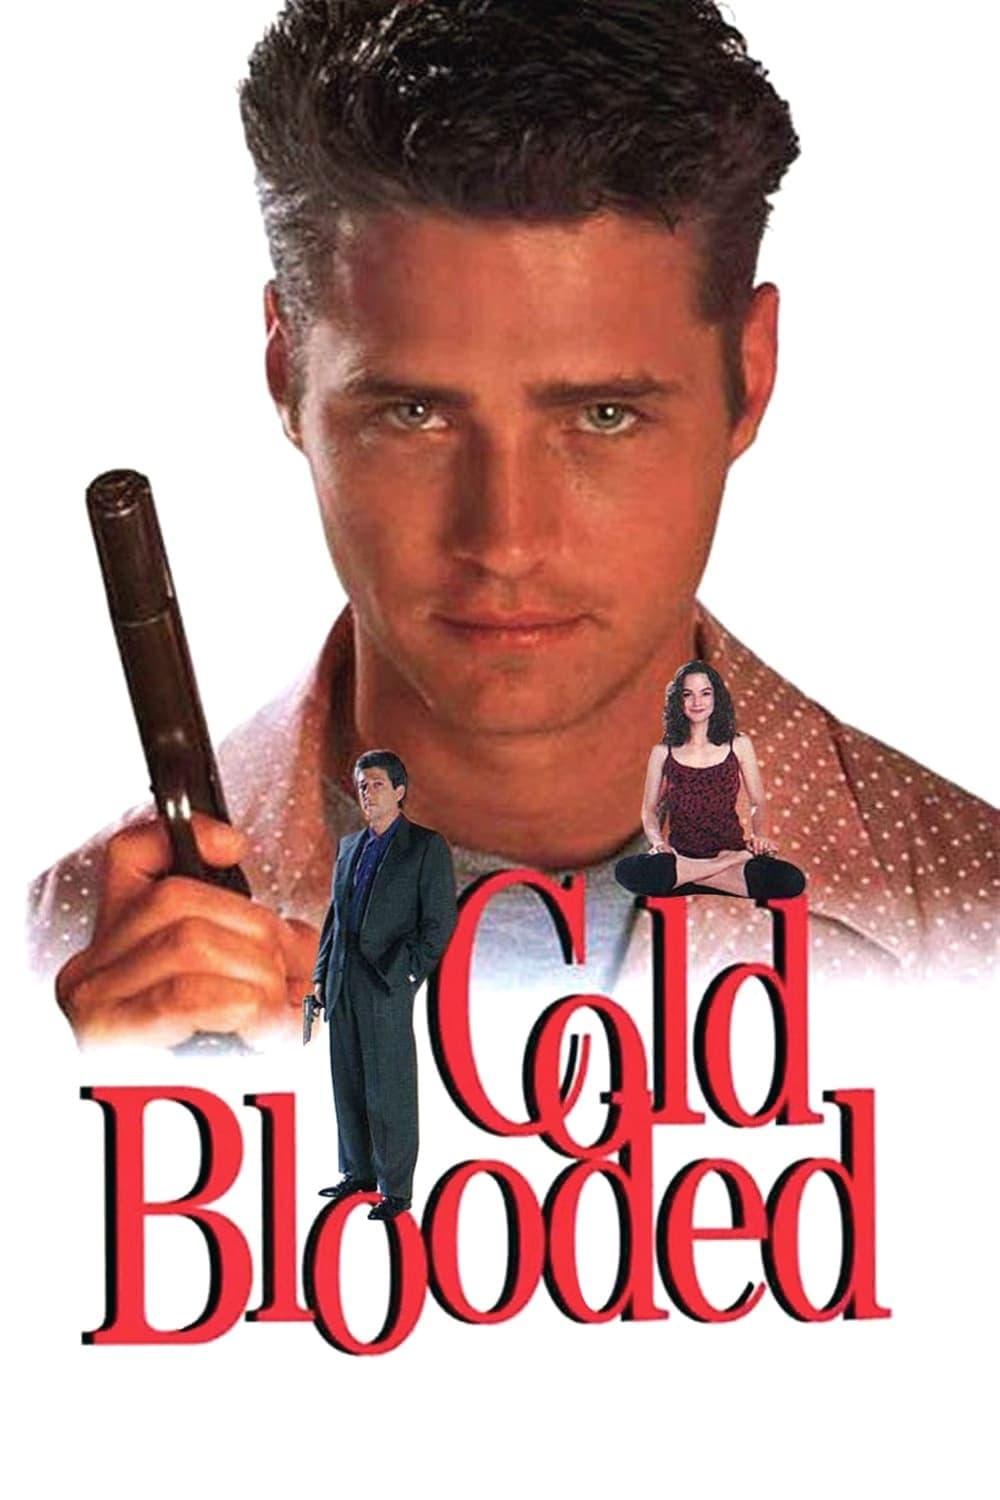 Coldblooded film